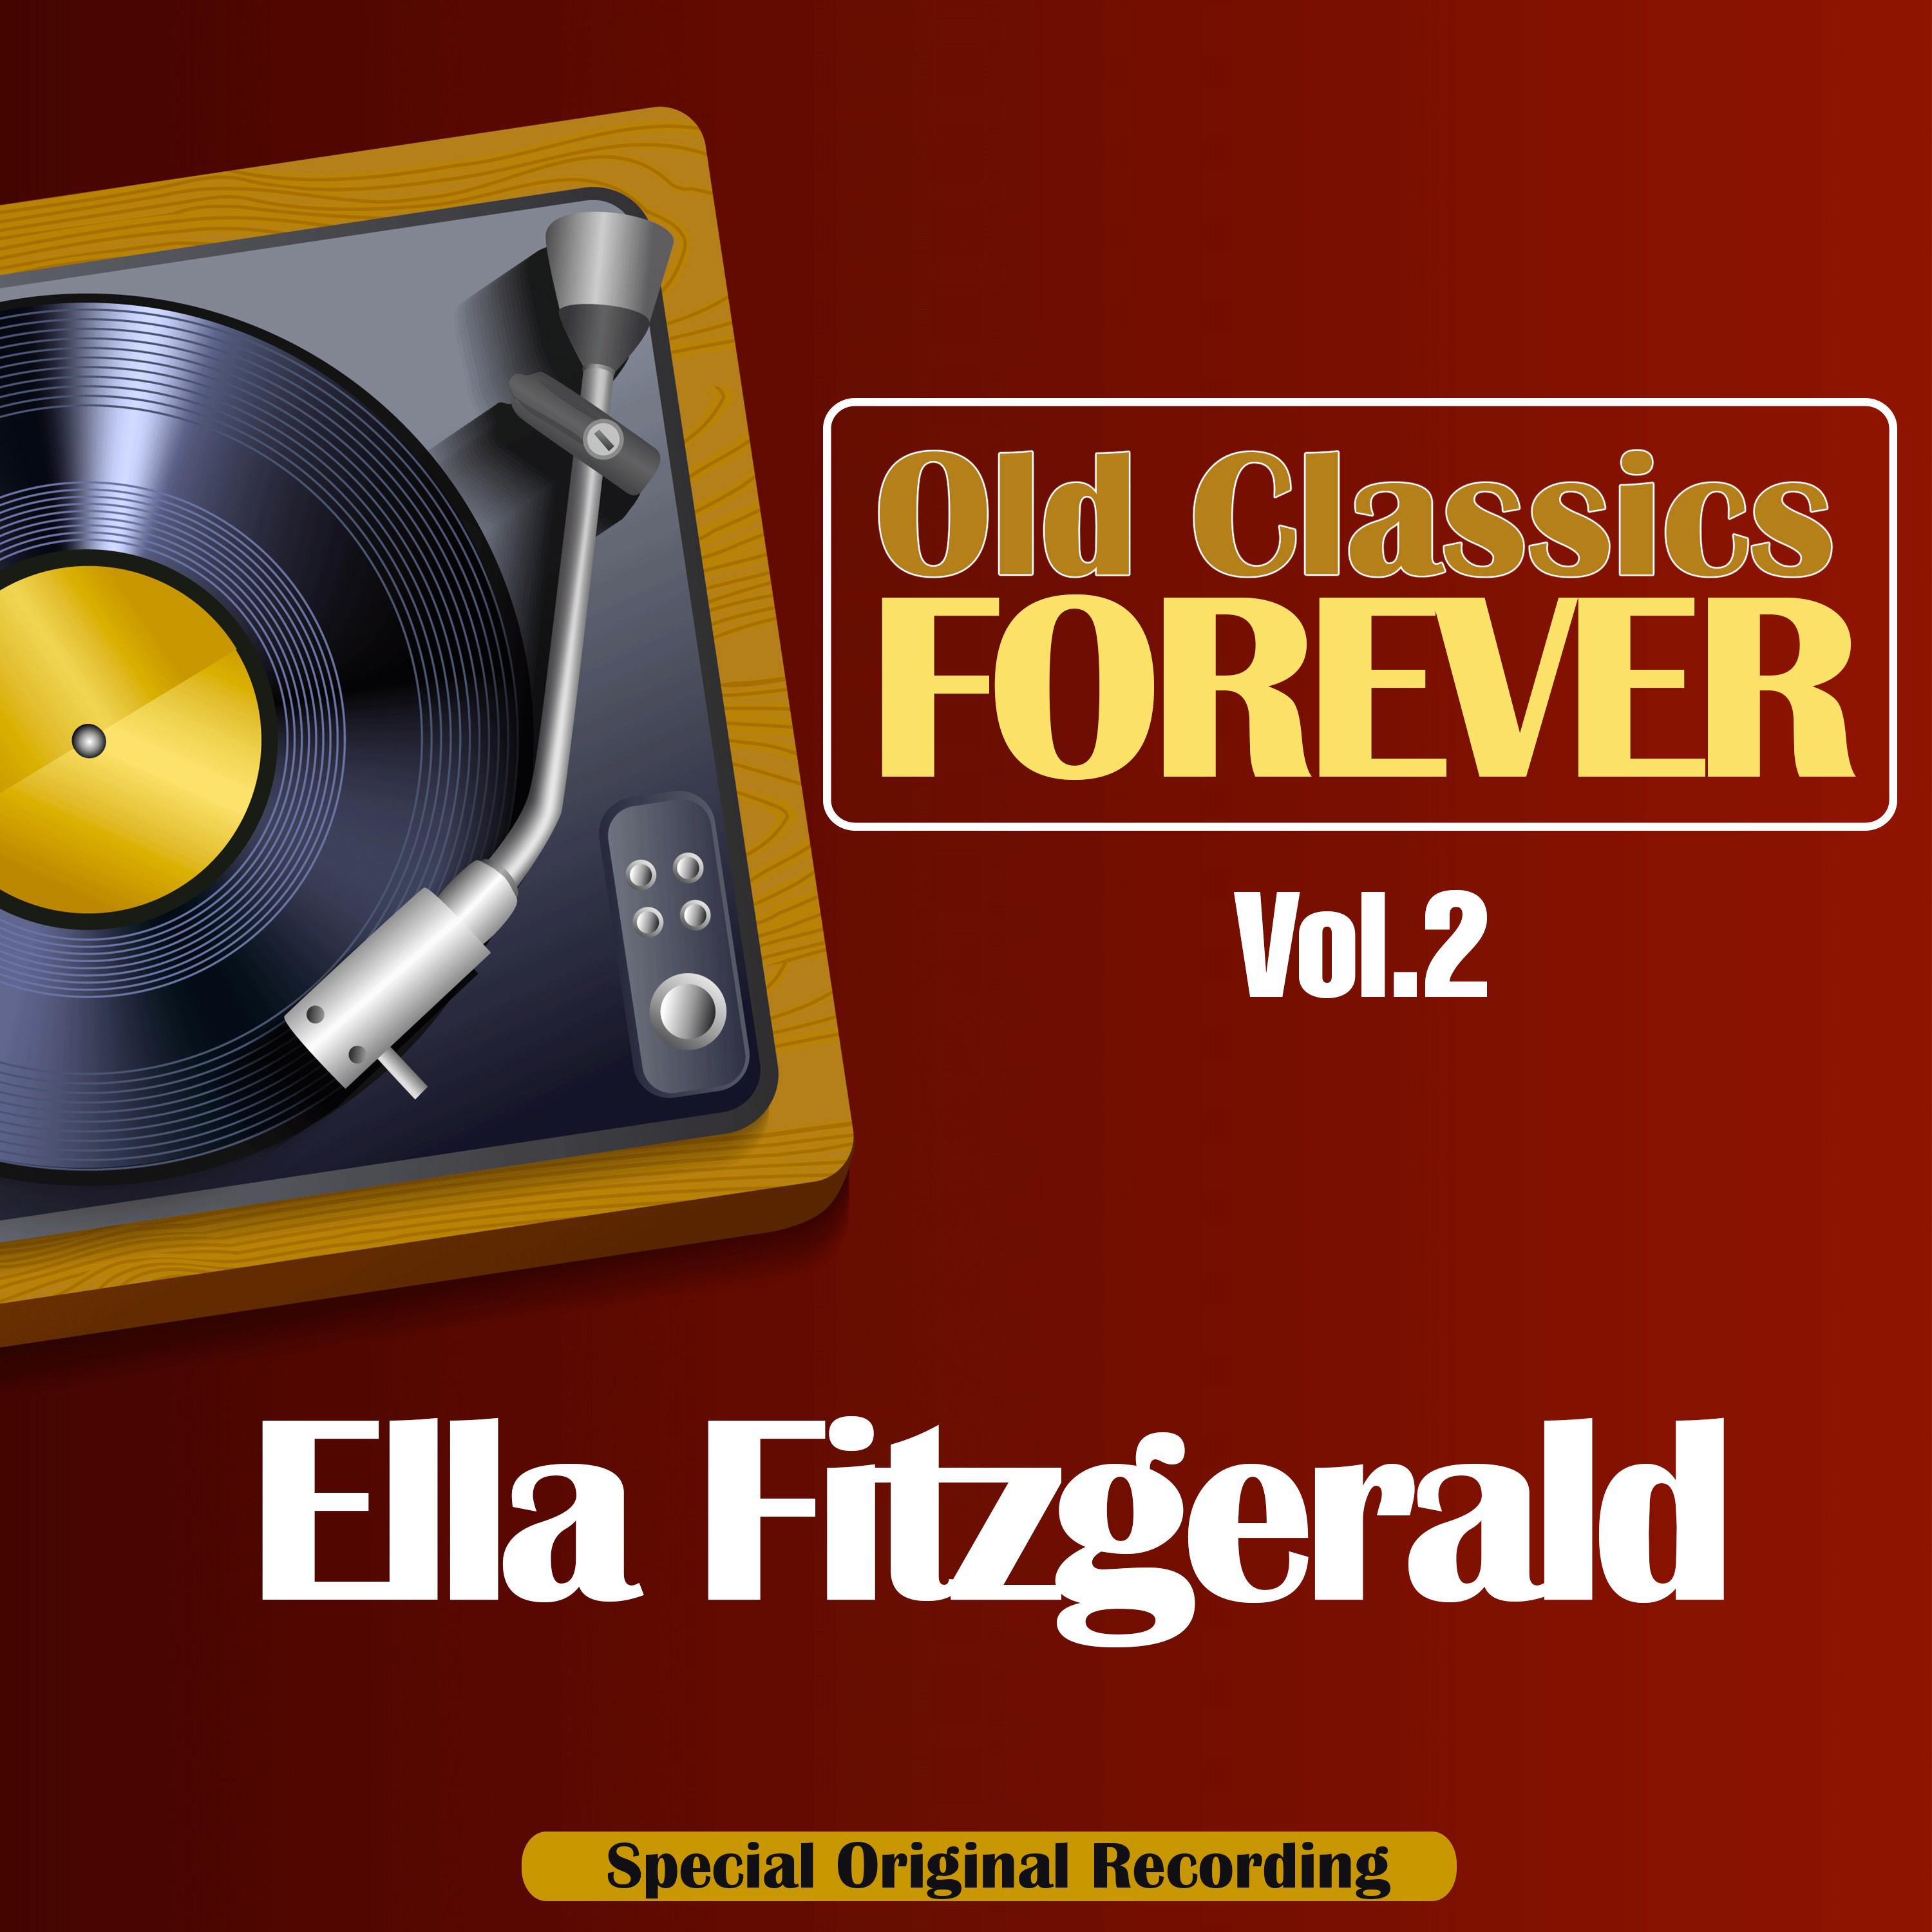 Old Classics Forever, Vol. 2 (Special Original Recording)